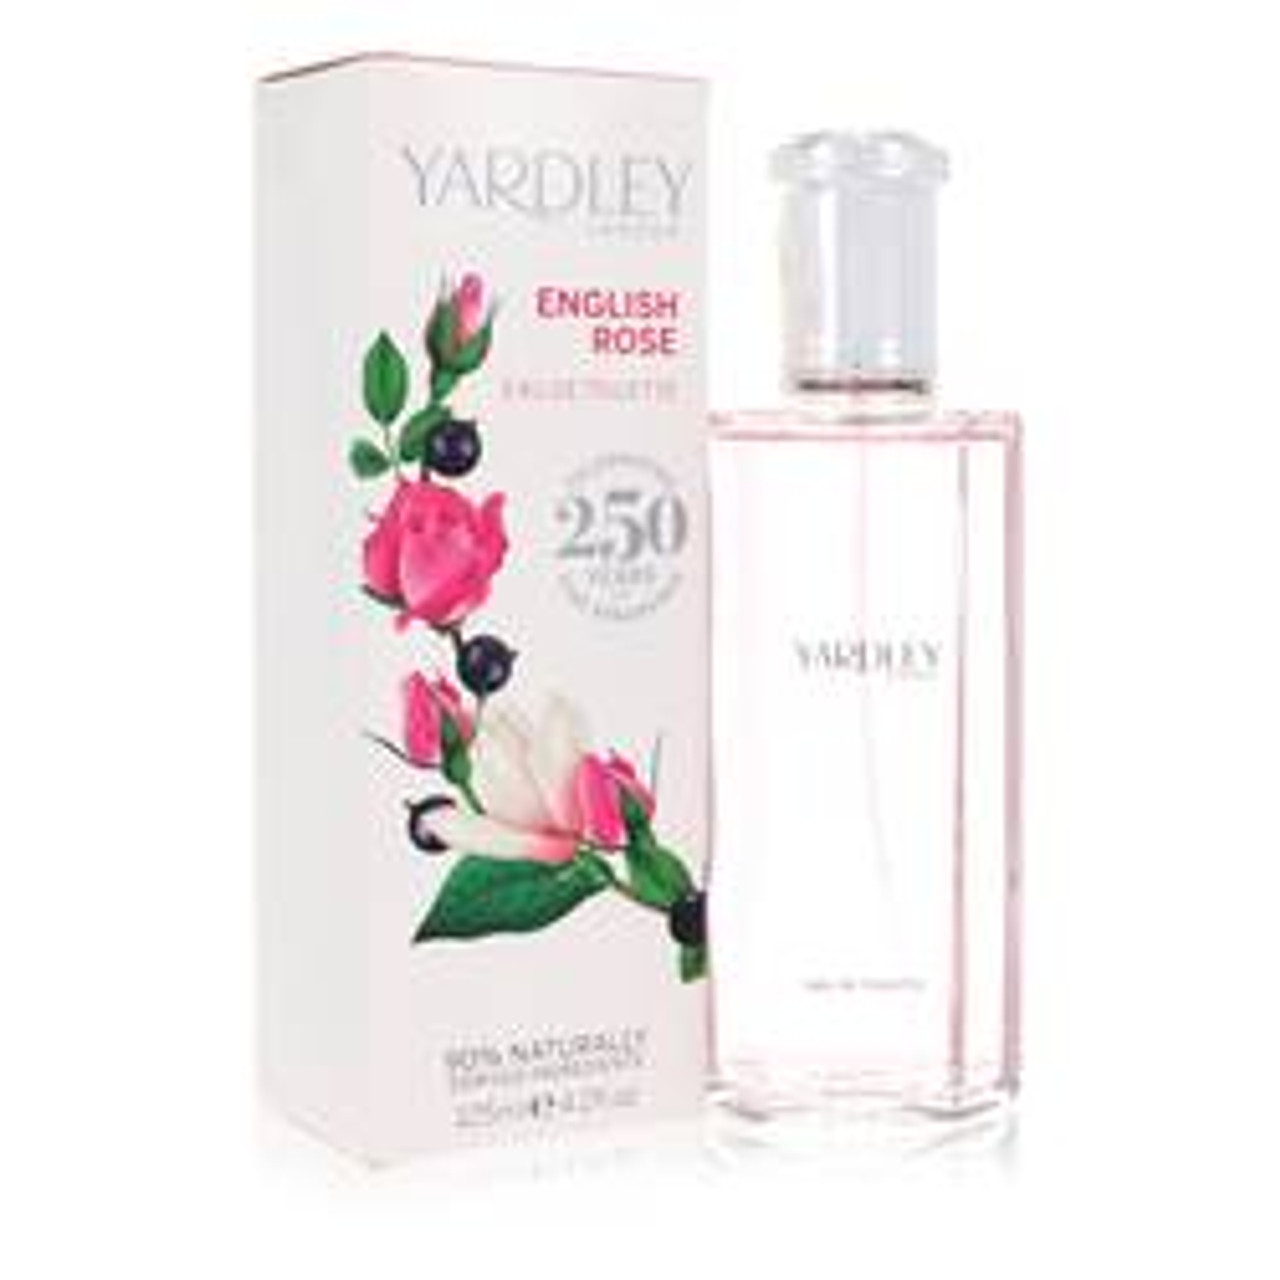 English Rose Yardley Perfume By Yardley London Eau De Toilette Spray 4.2 oz for Women - [From 55.00 - Choose pk Qty ] - *Ships from Miami